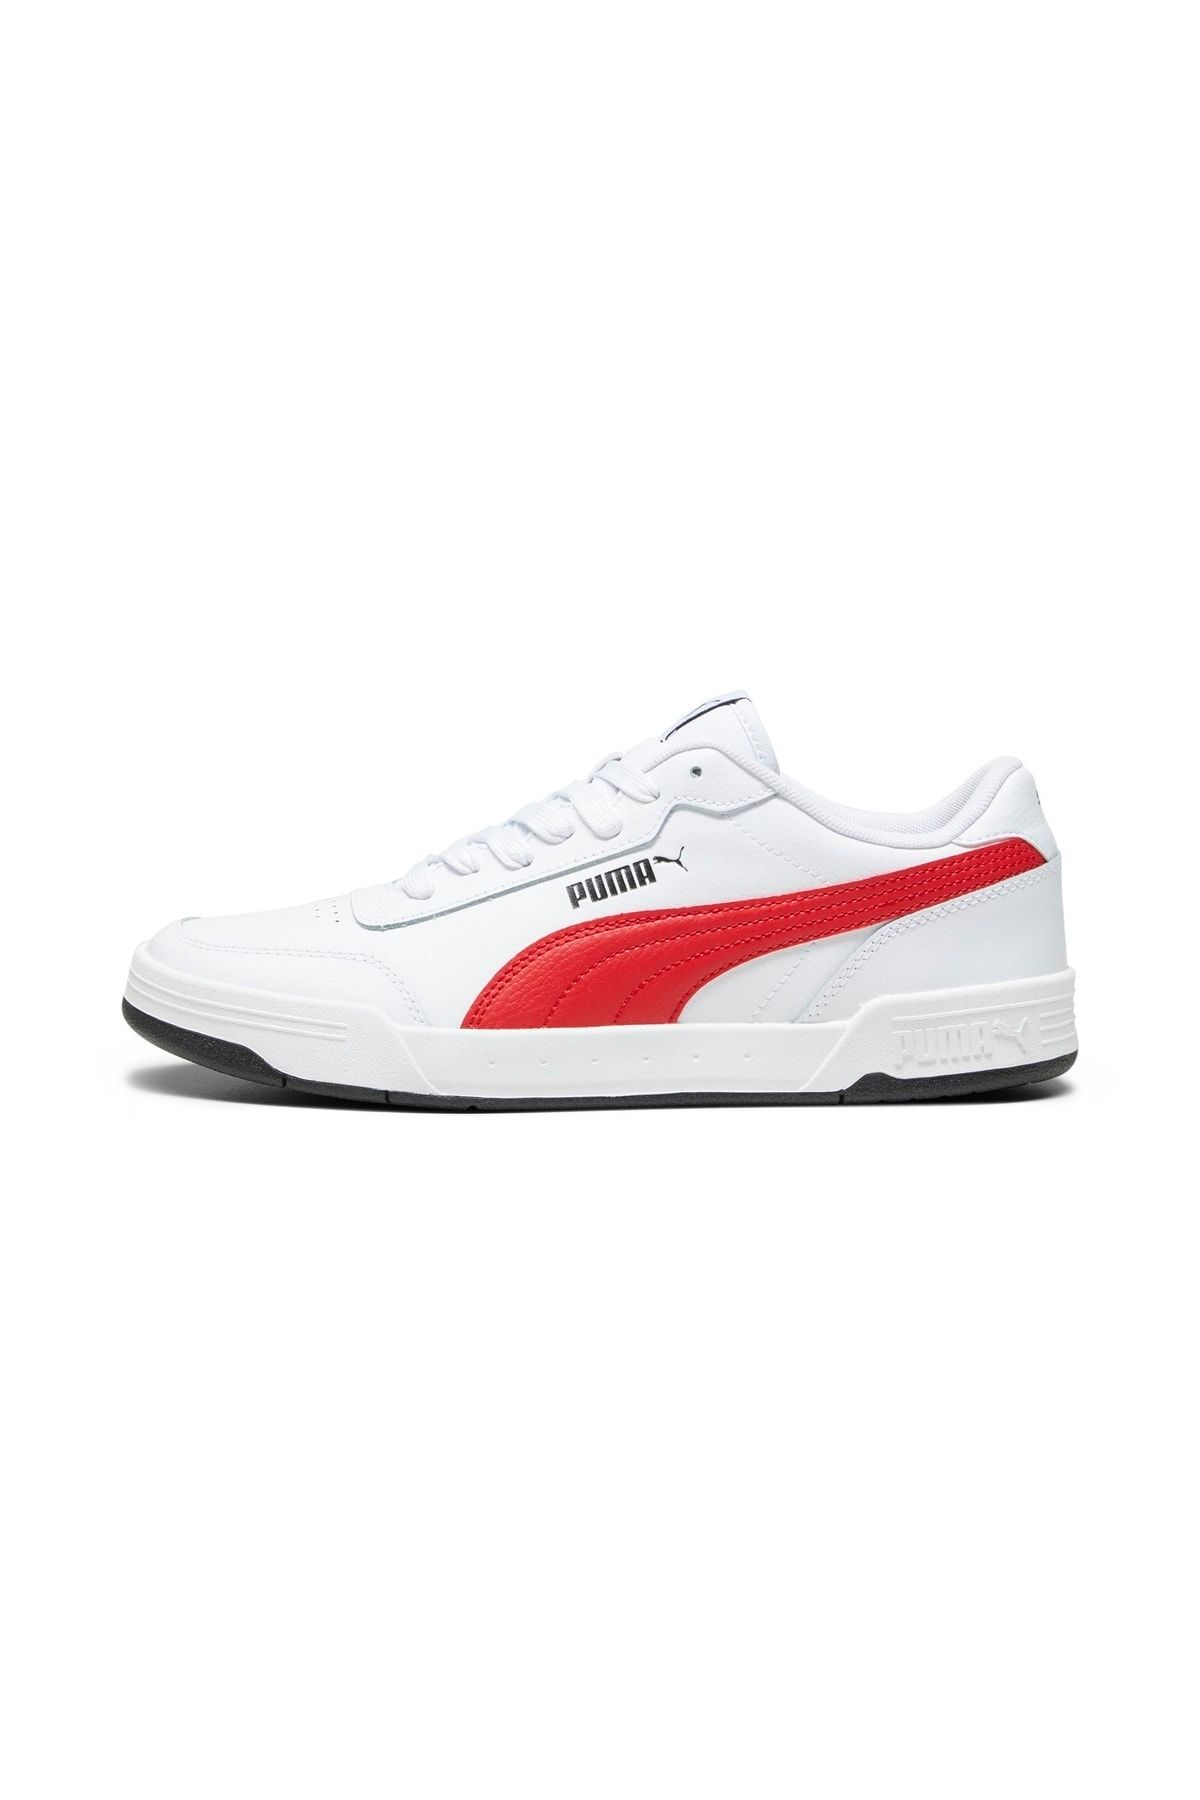 Puma Caracal - Beyaz Unisex Sneaker